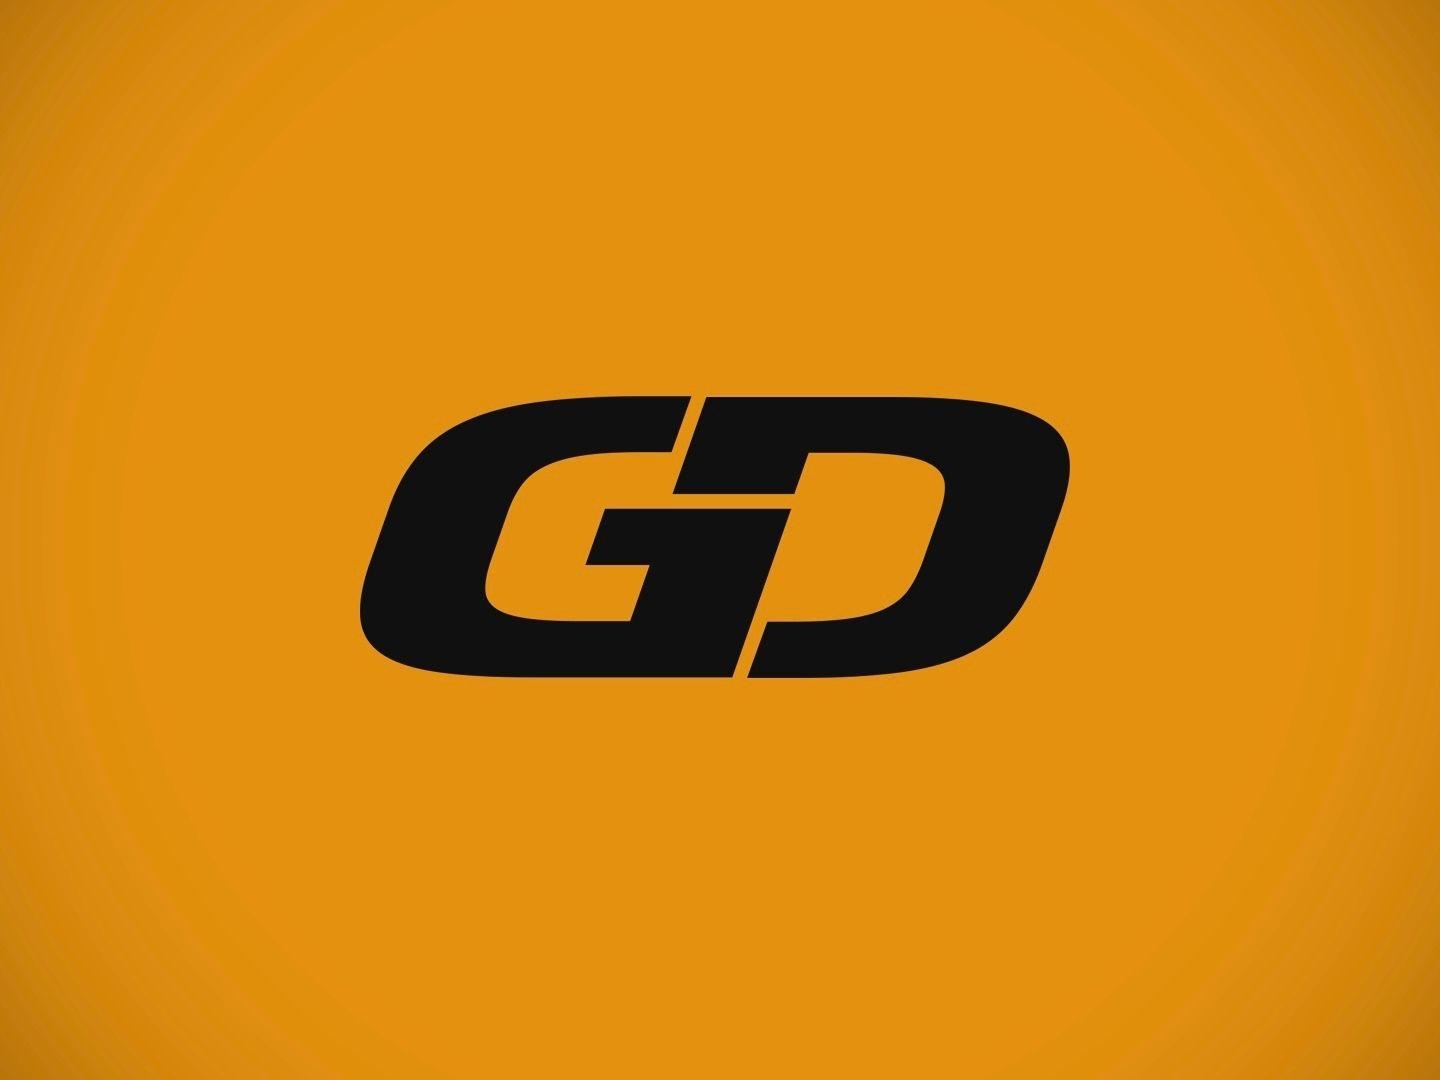 Orange Channel Logo - German Driver YouTube channel logo revised